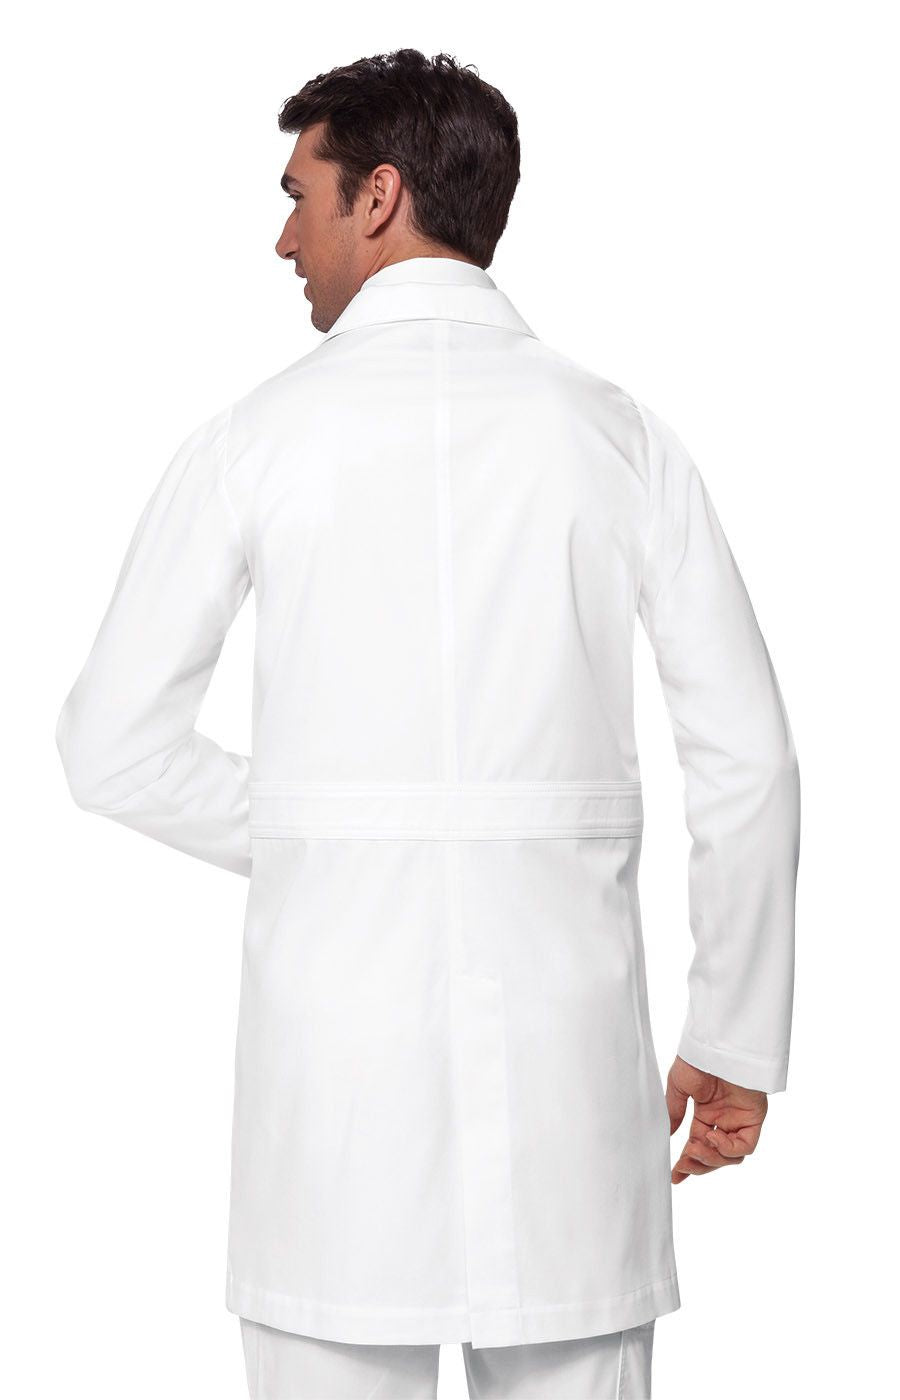 Koi Classics "Jack" Men's Lab Coat